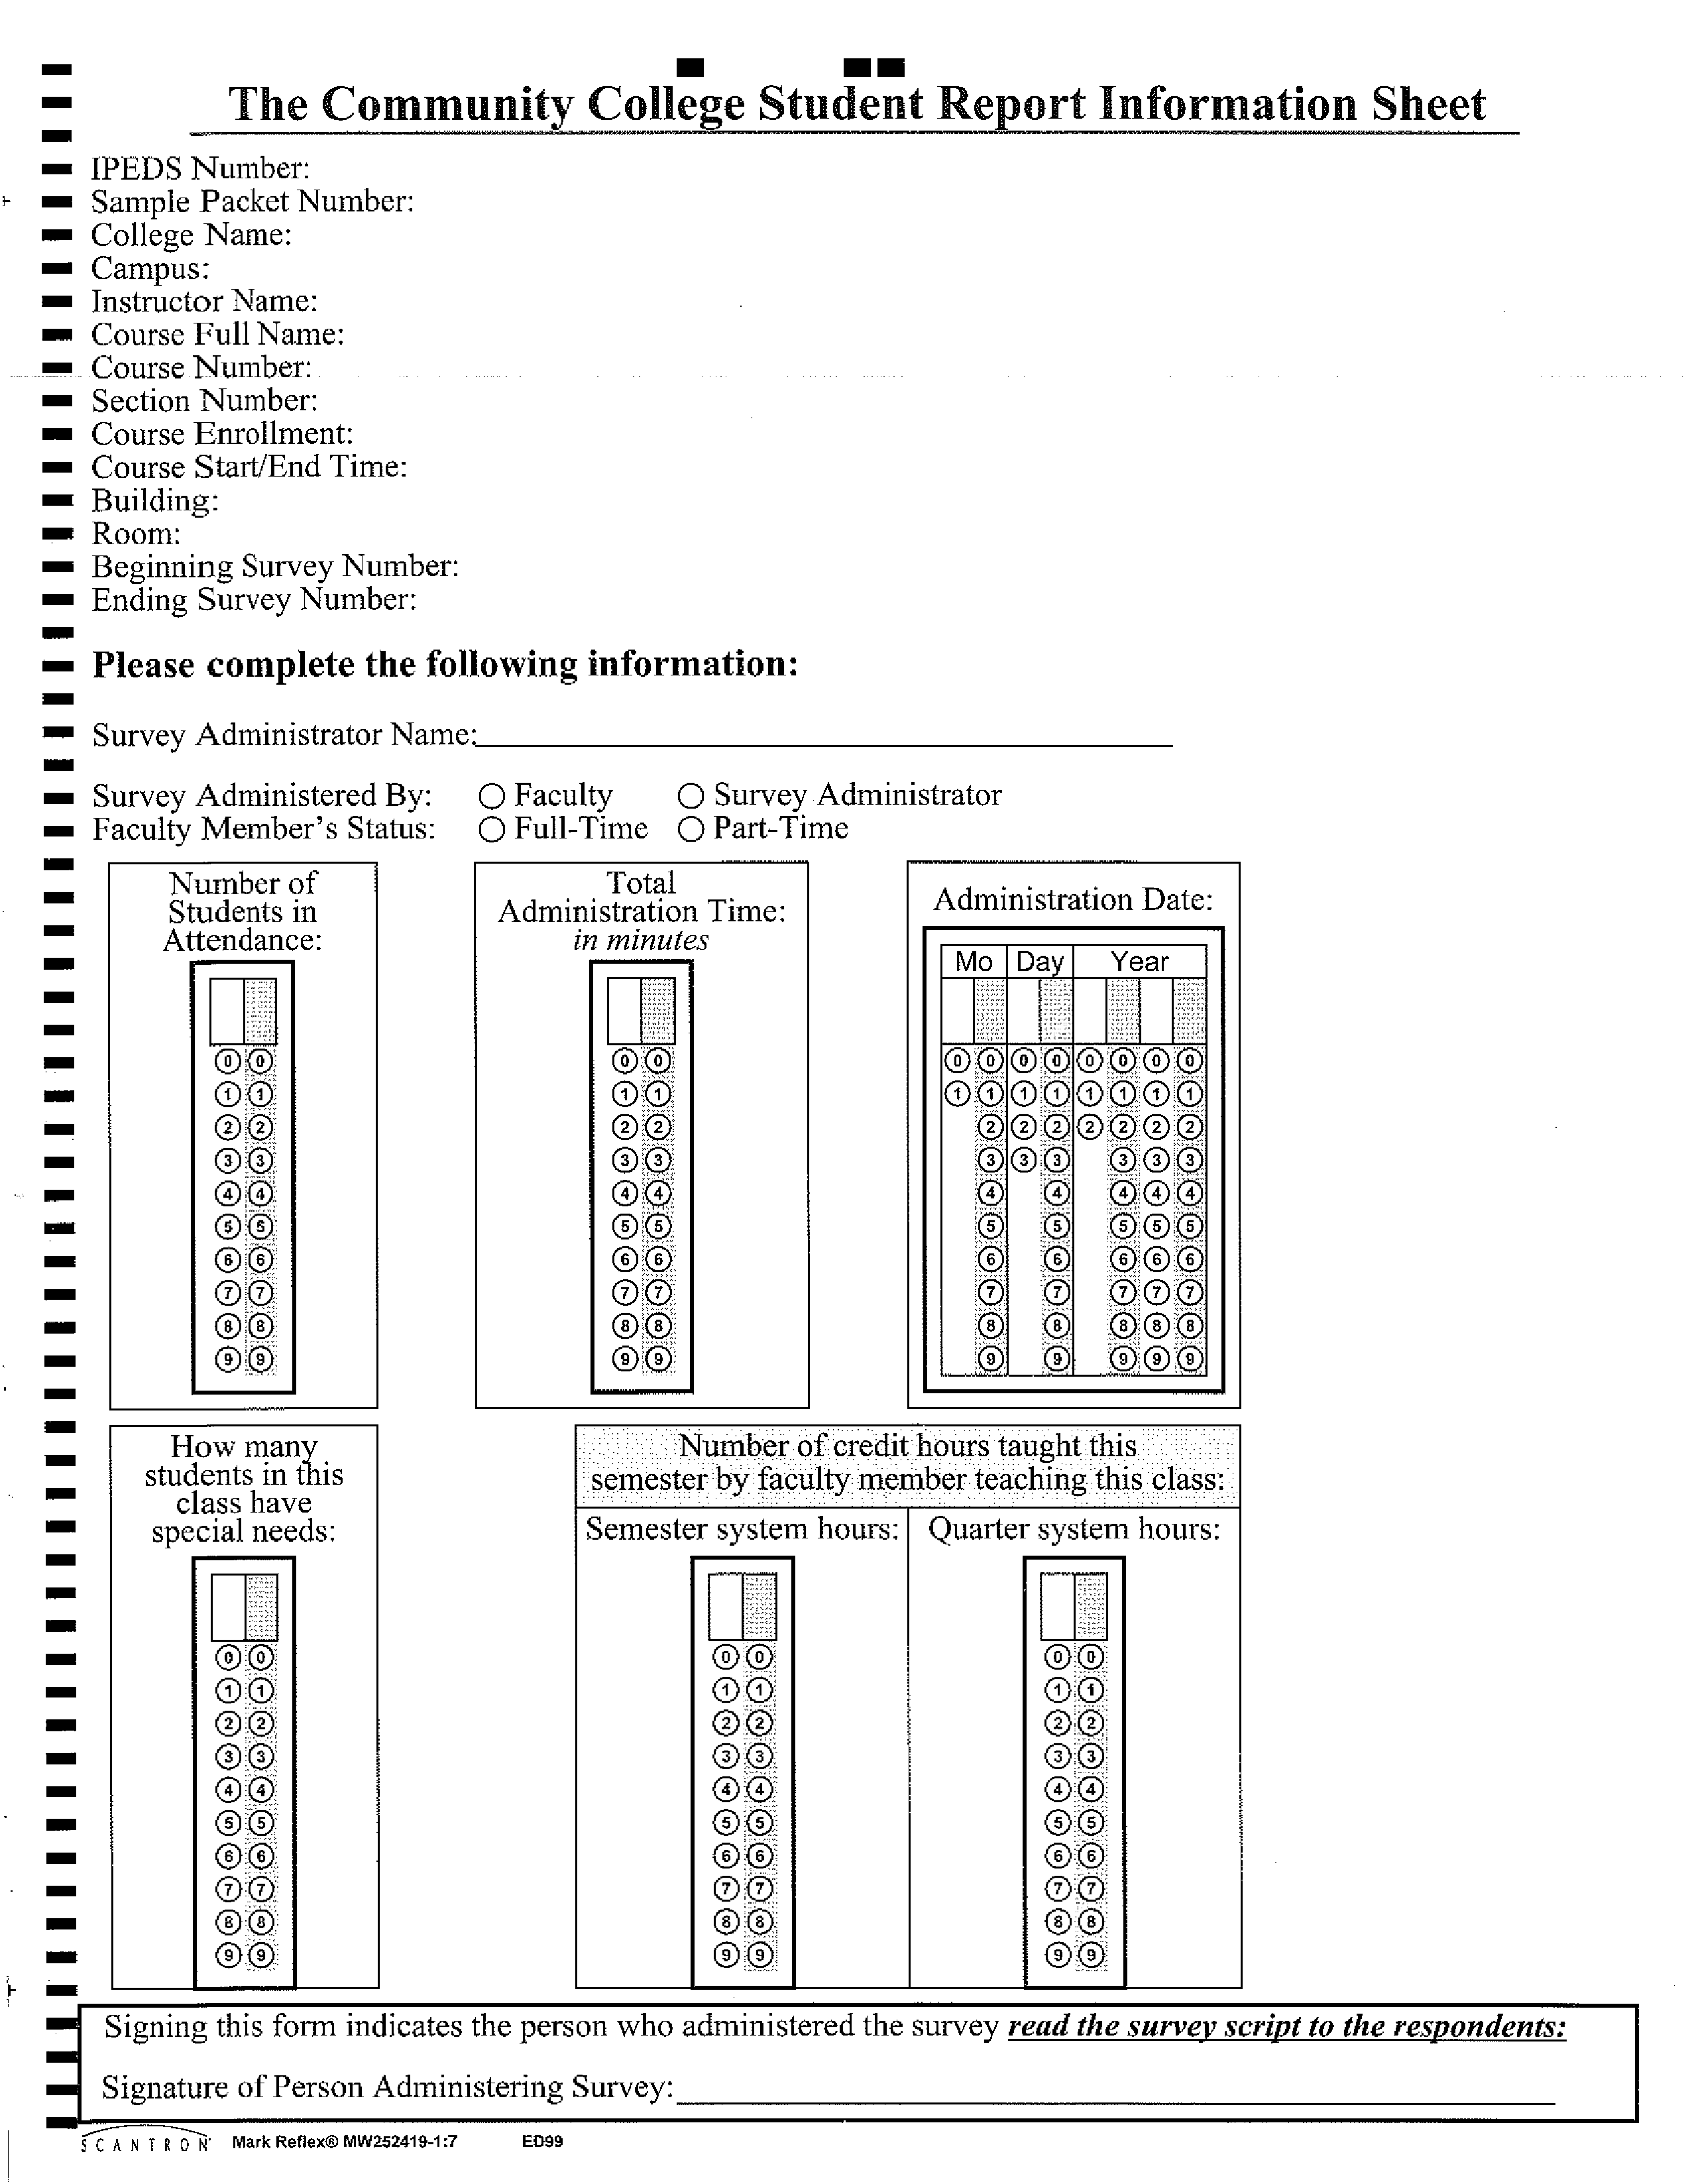 college student report information sheet plantilla imagen principal